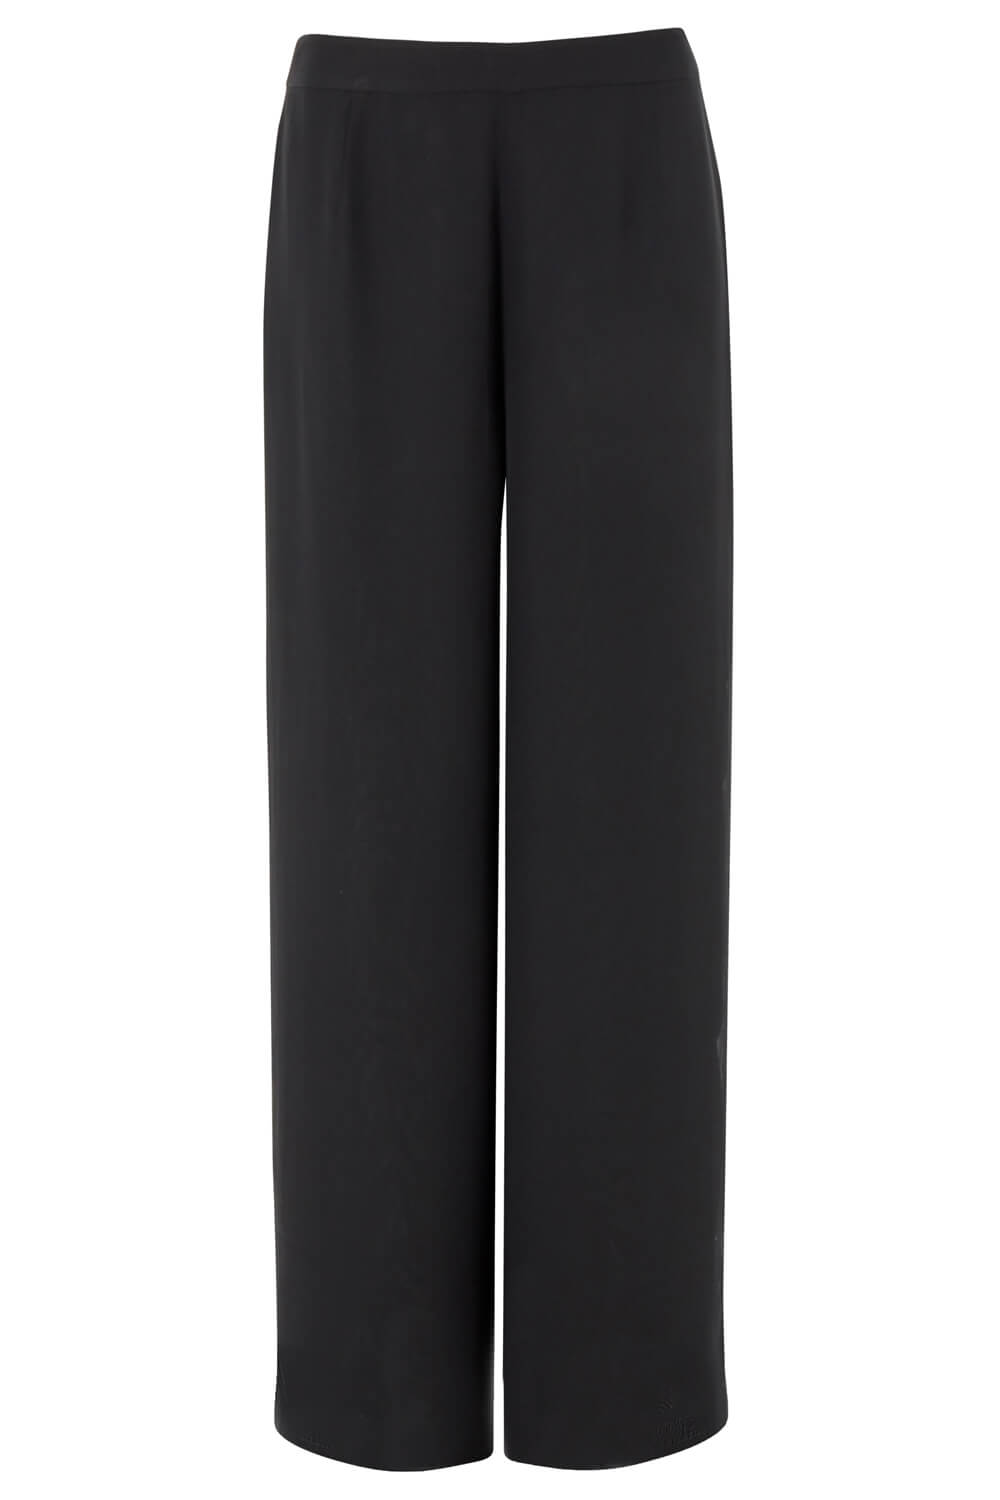 Black Diamante Side Split Chiffon Trousers, Image 5 of 5